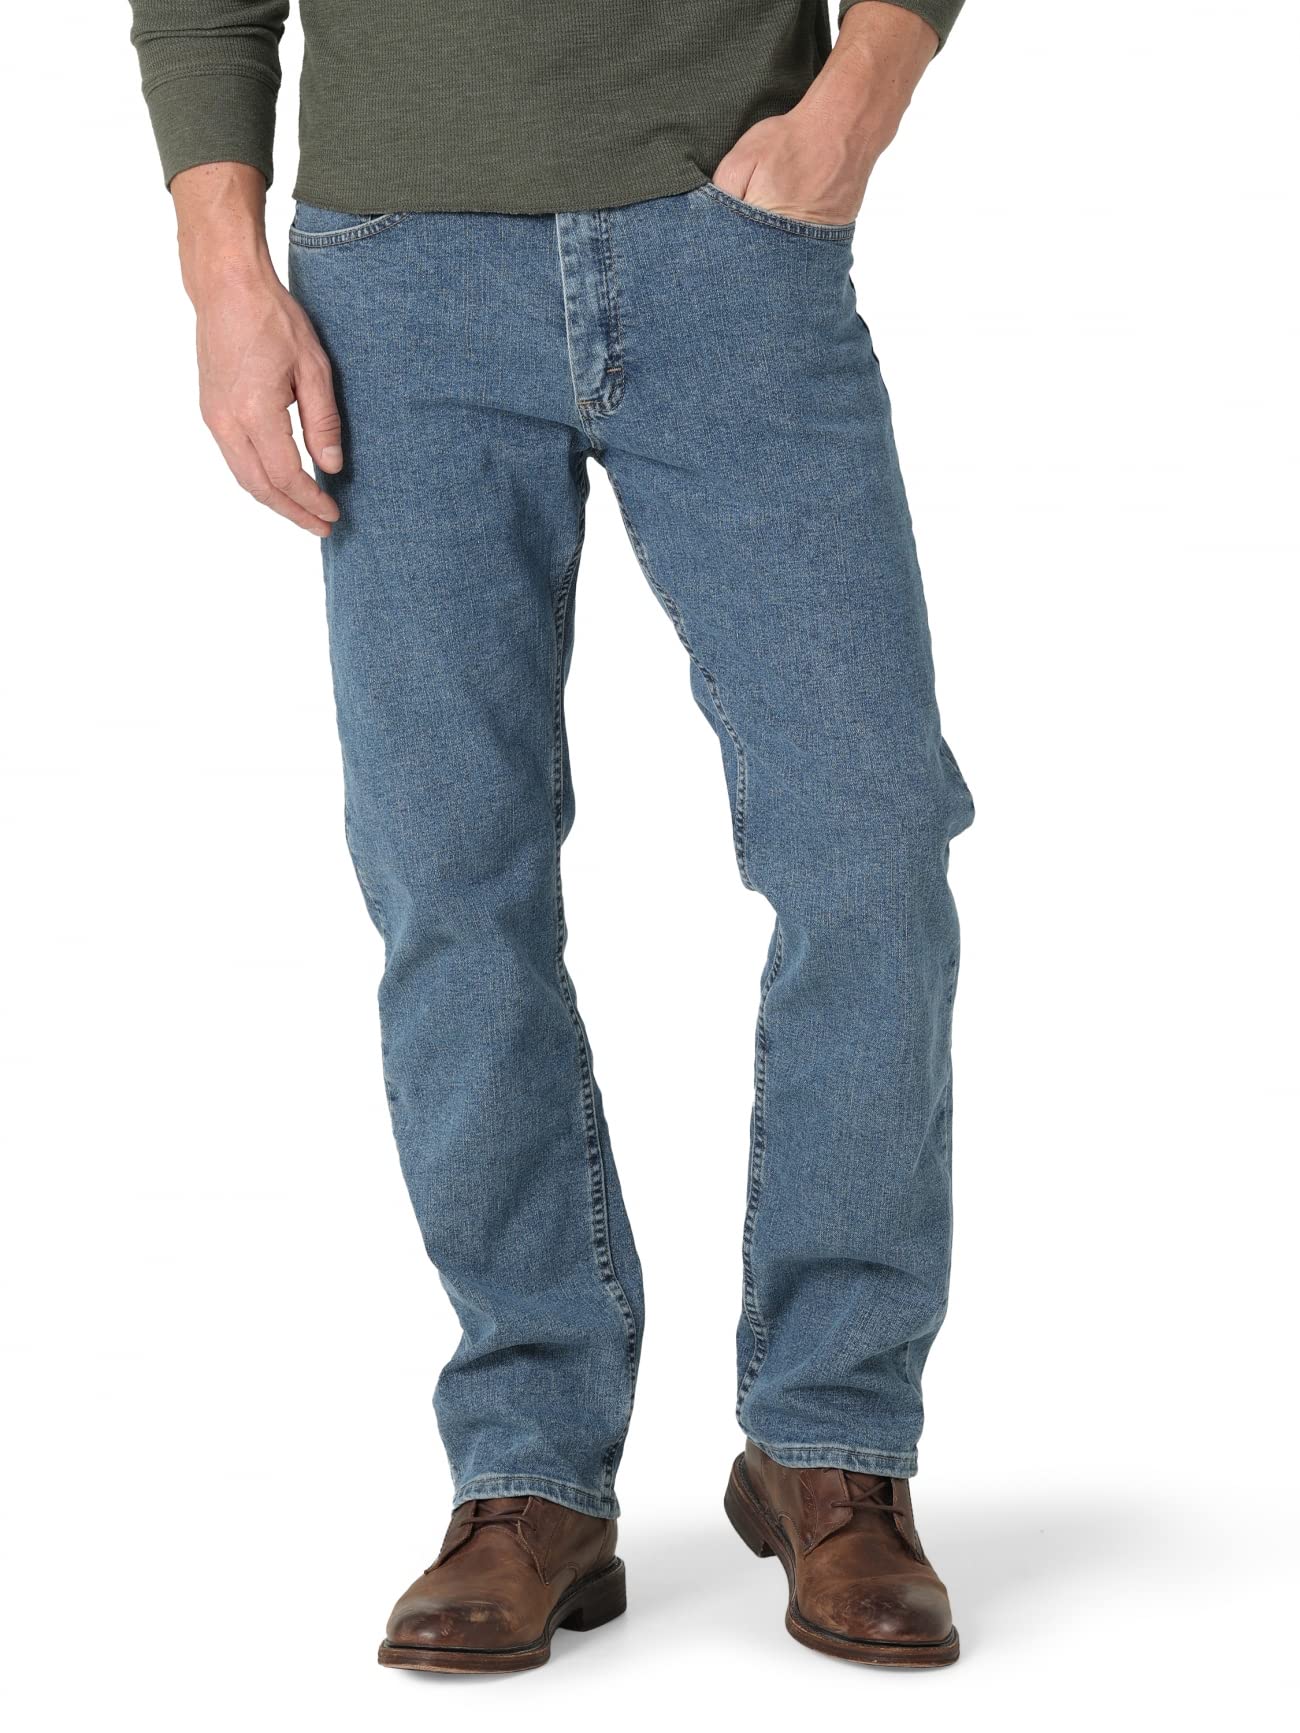 Wrangler Authentics Men's Regular Fit Comfort Flex Waist Jean, Light Stonewash, 42W x 32L